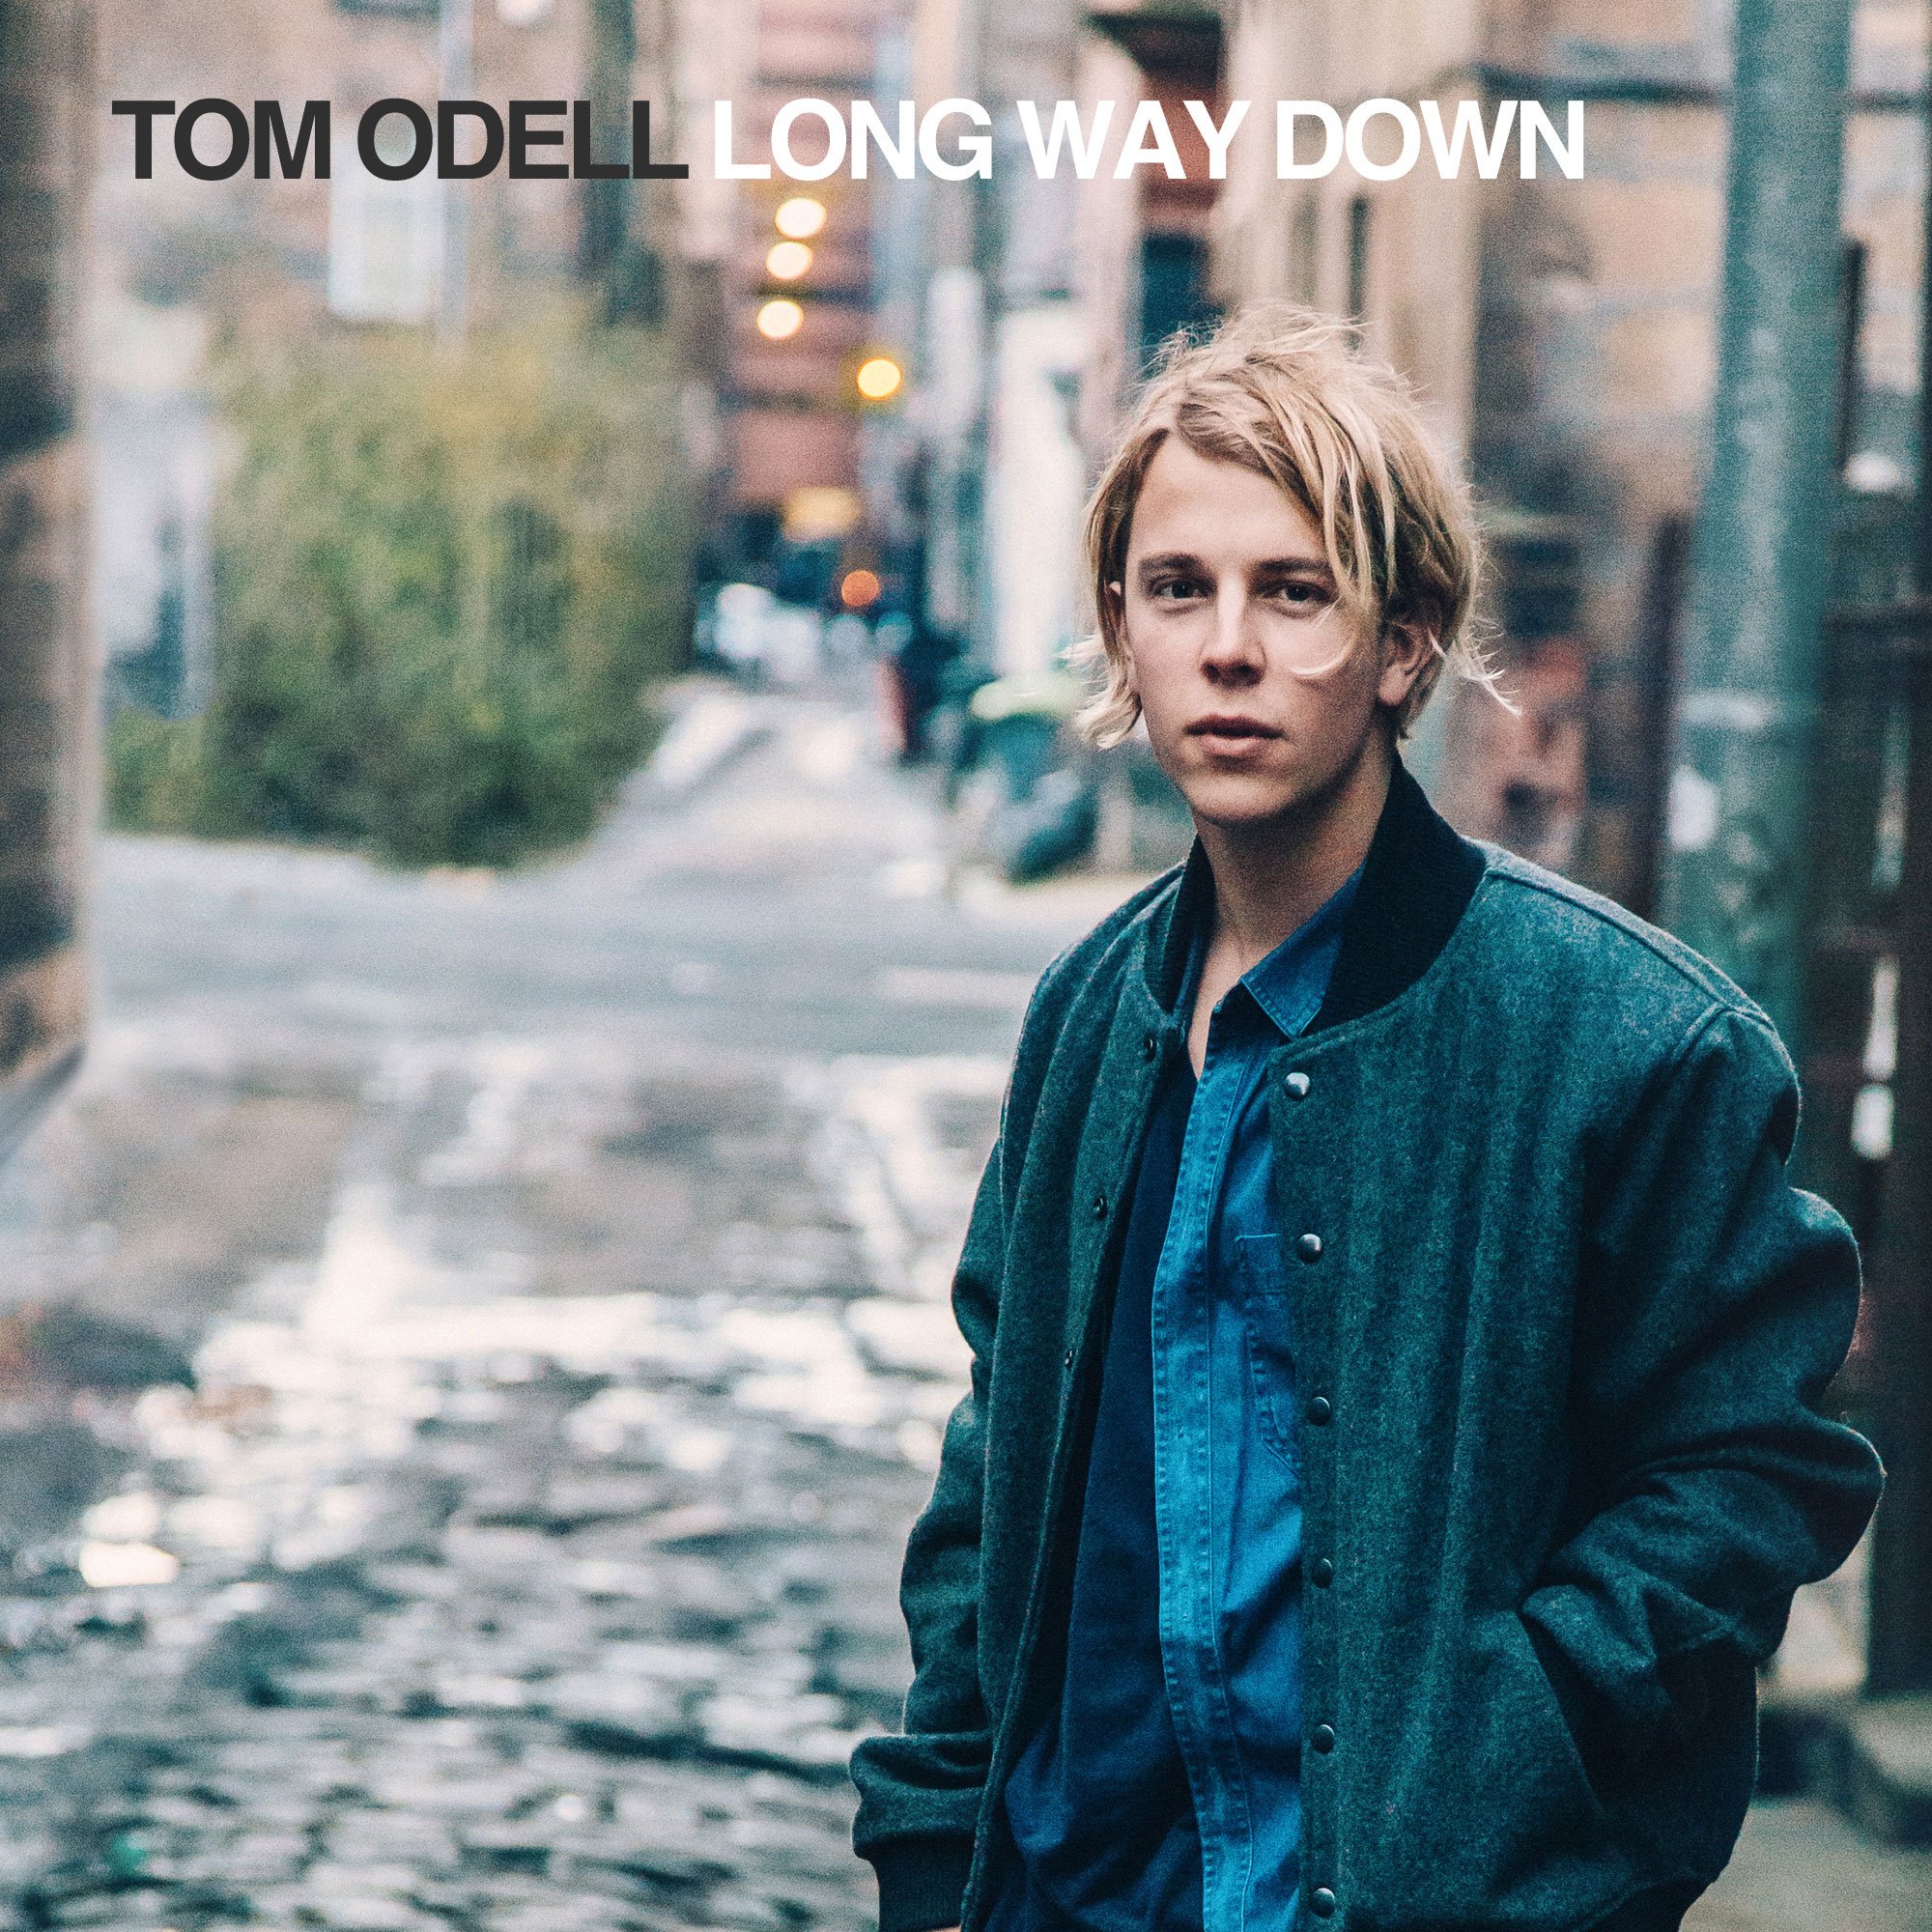 Tom Odell L'album "Long Way Down" de Tom Odell est disponible en CD